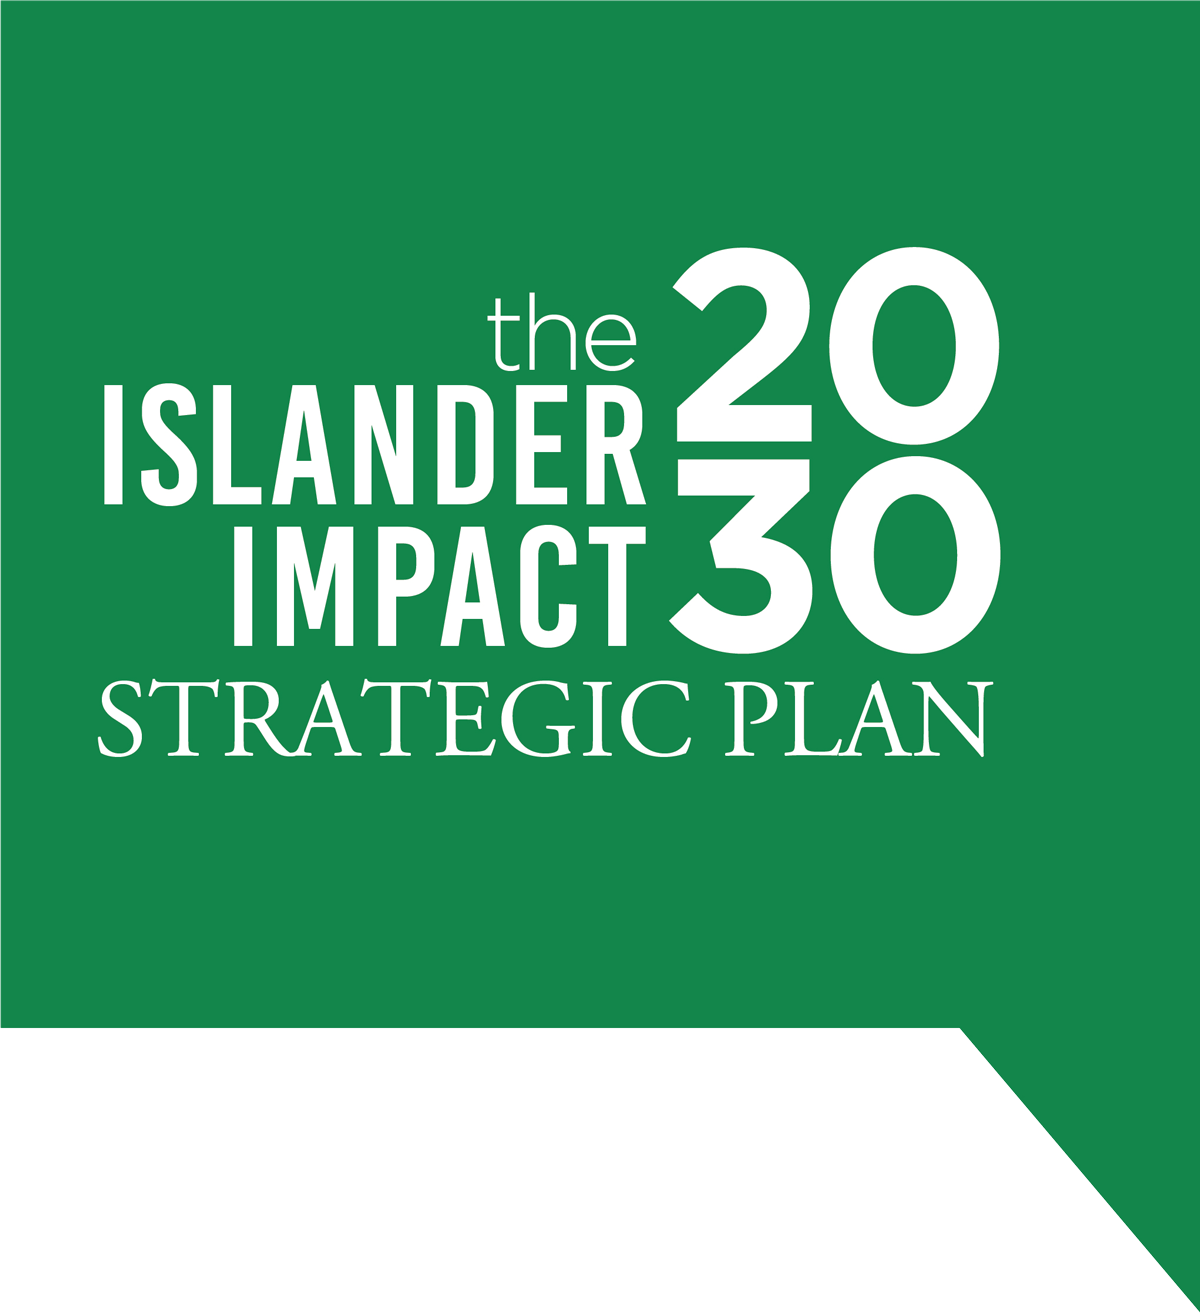 The Islander Impact 2030 Strategic Plan graphic